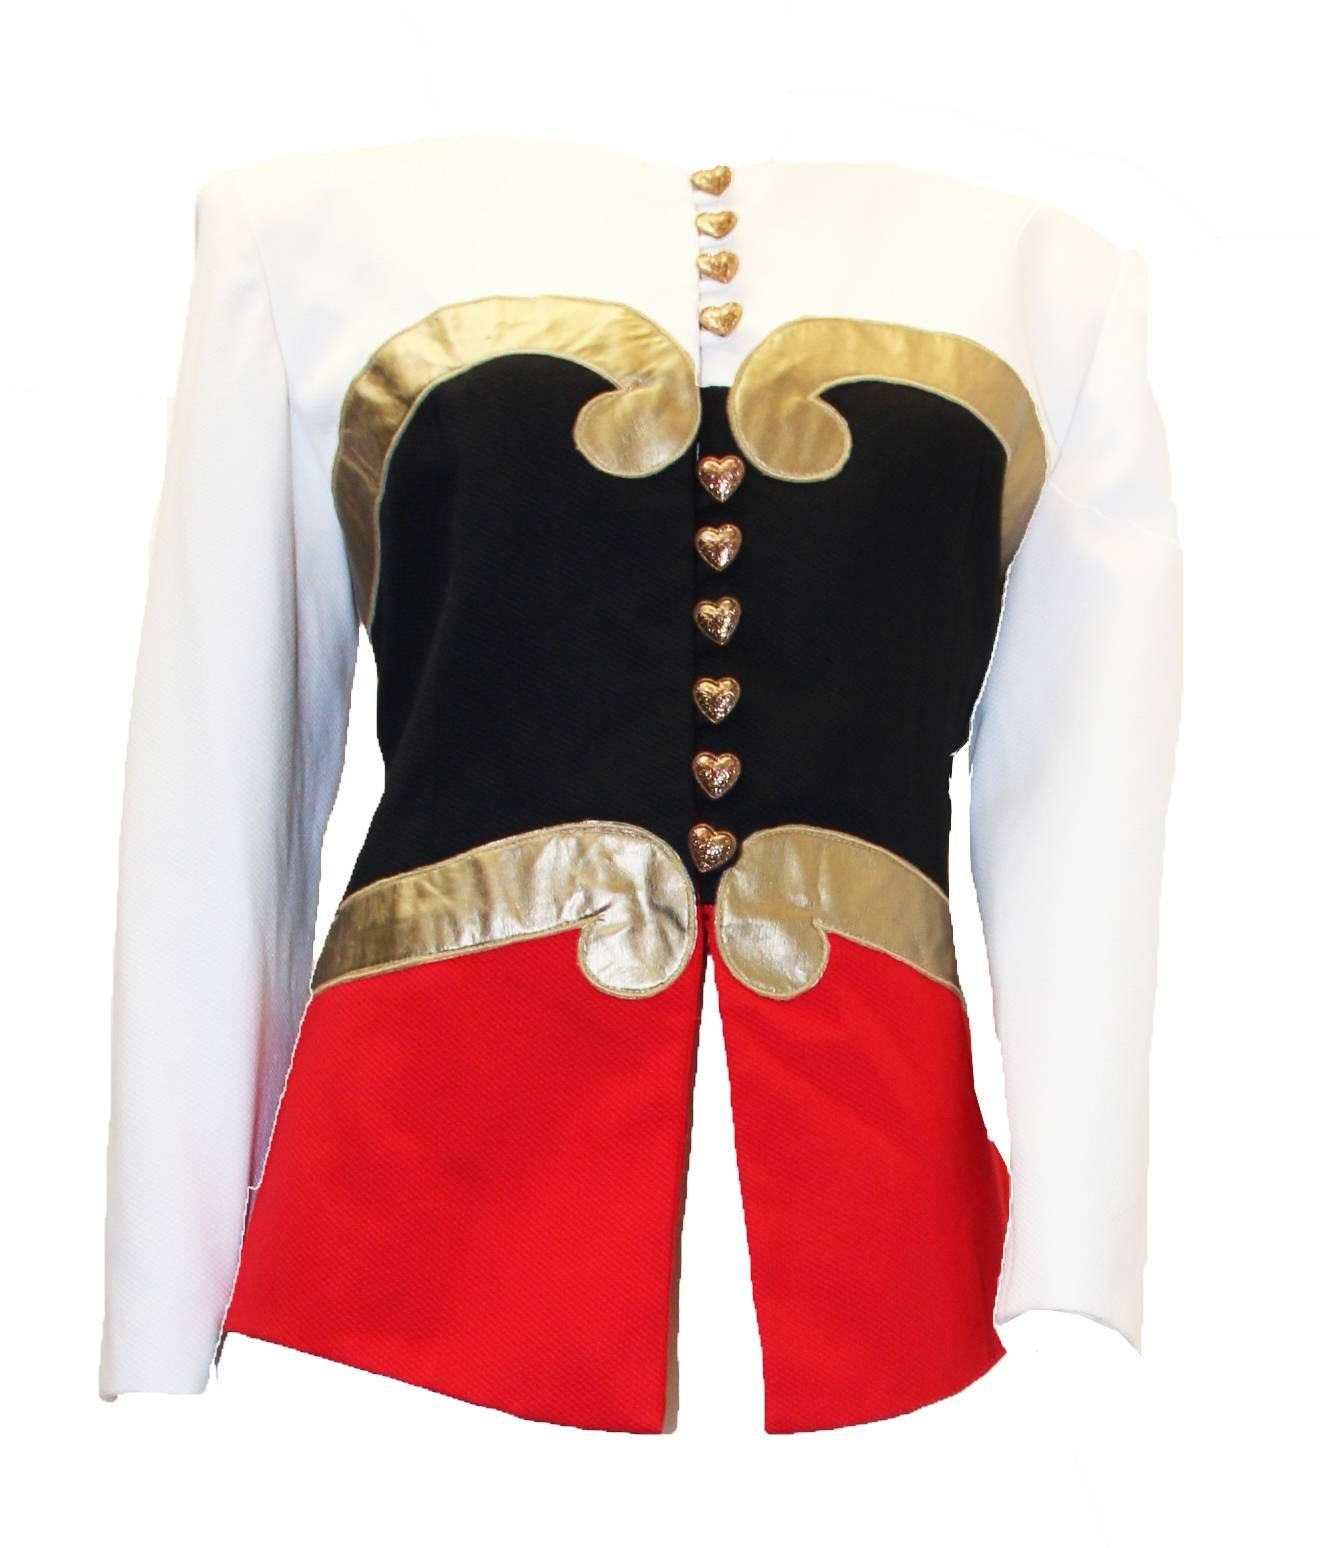 Black, red and white with gold appliqué 1980s Pierre Balmain woven jacket. 

Measurements:
Shoulder: 17